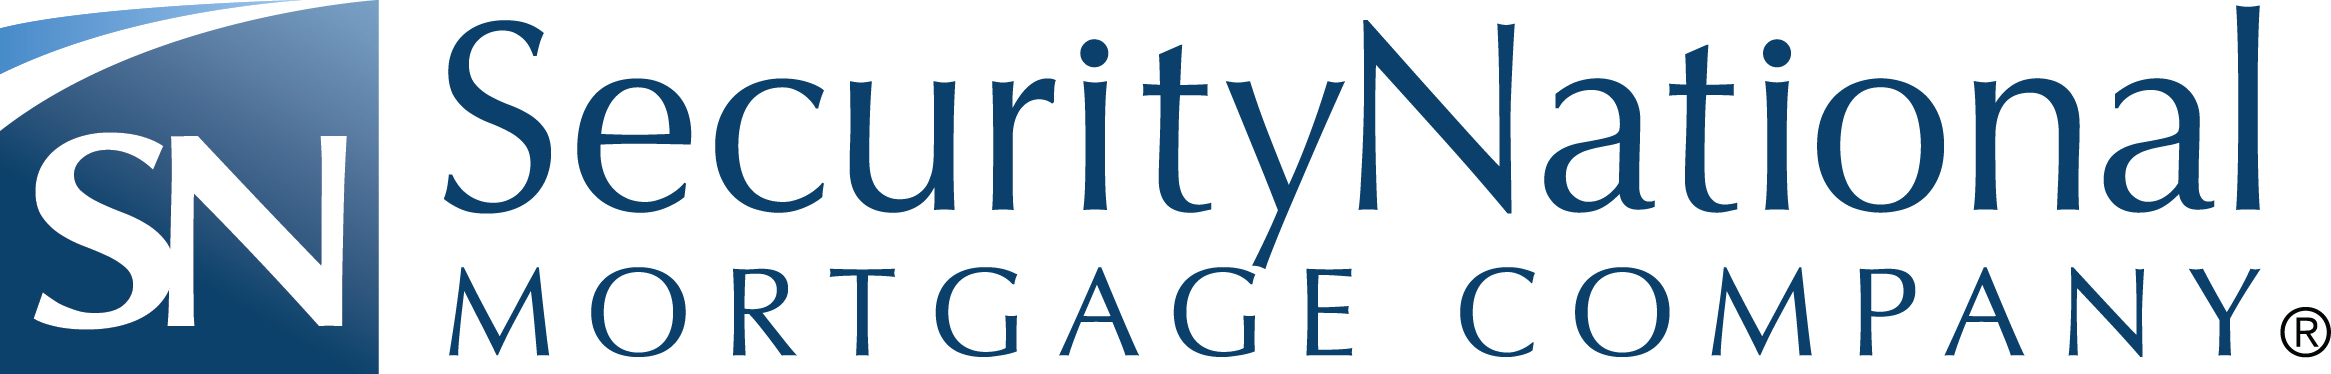 SecurityNational Mortgage Company (SNMC) Logo